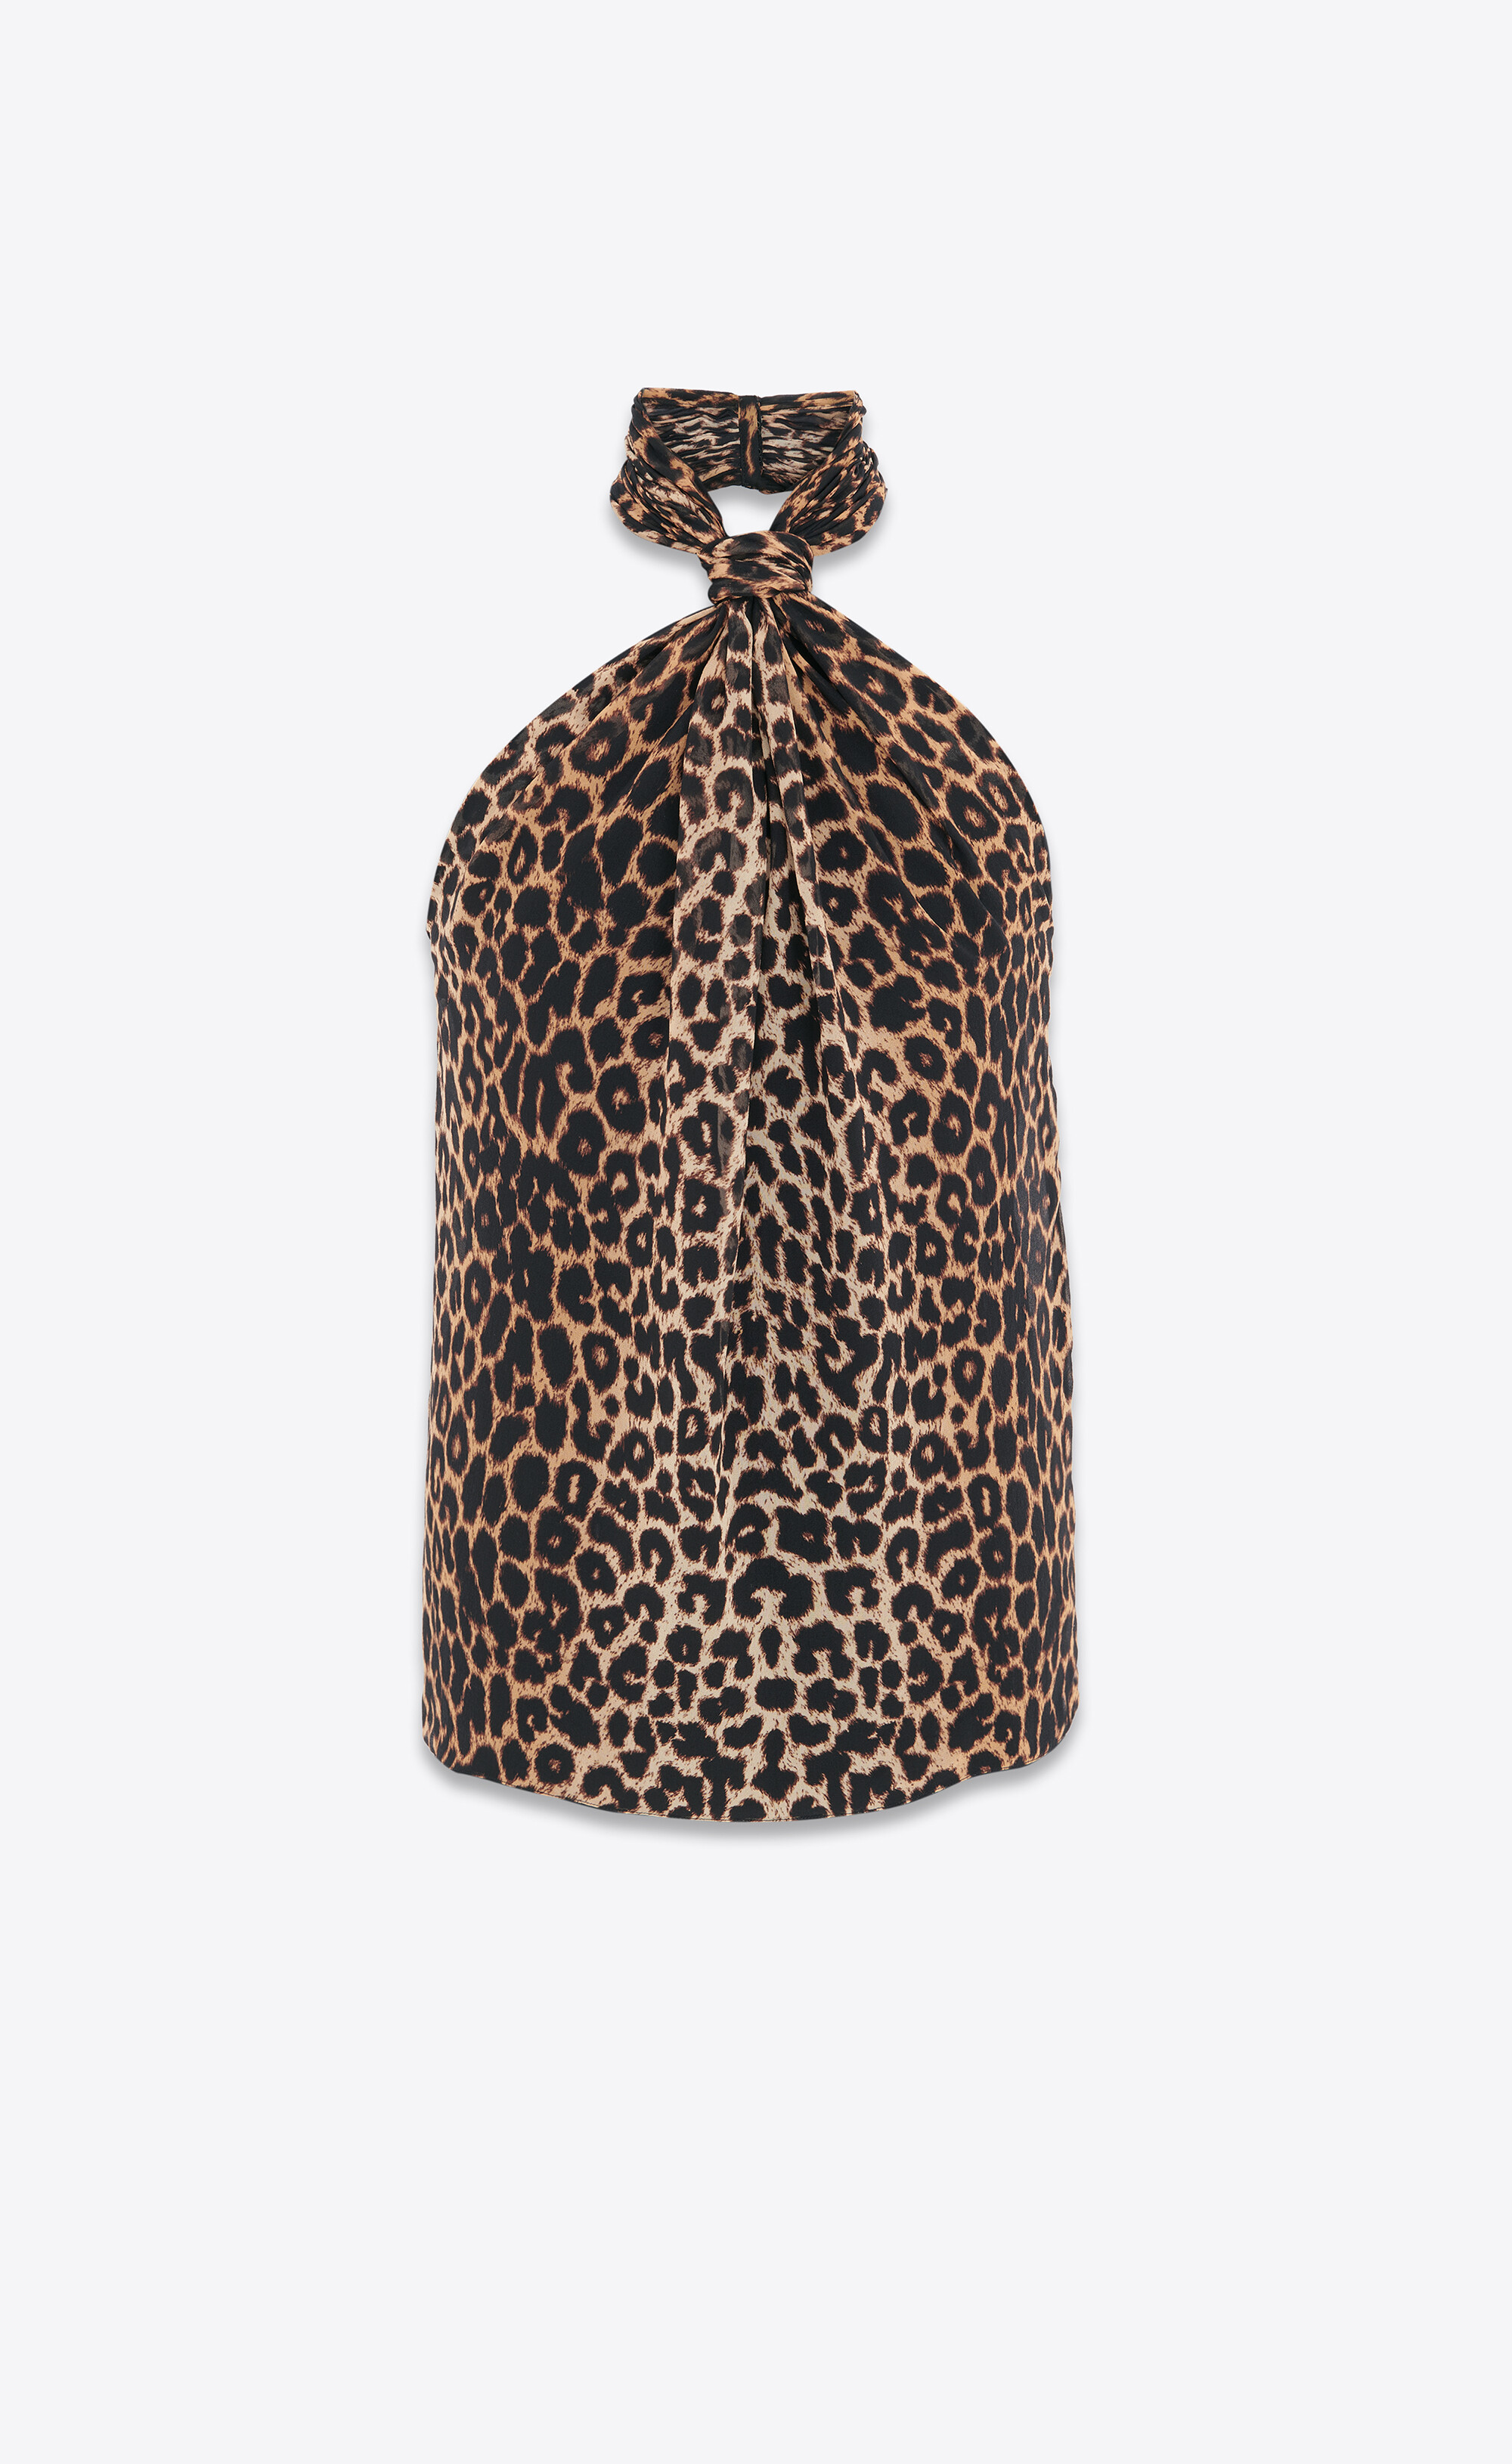 Zara leopard print top｜TikTok Search